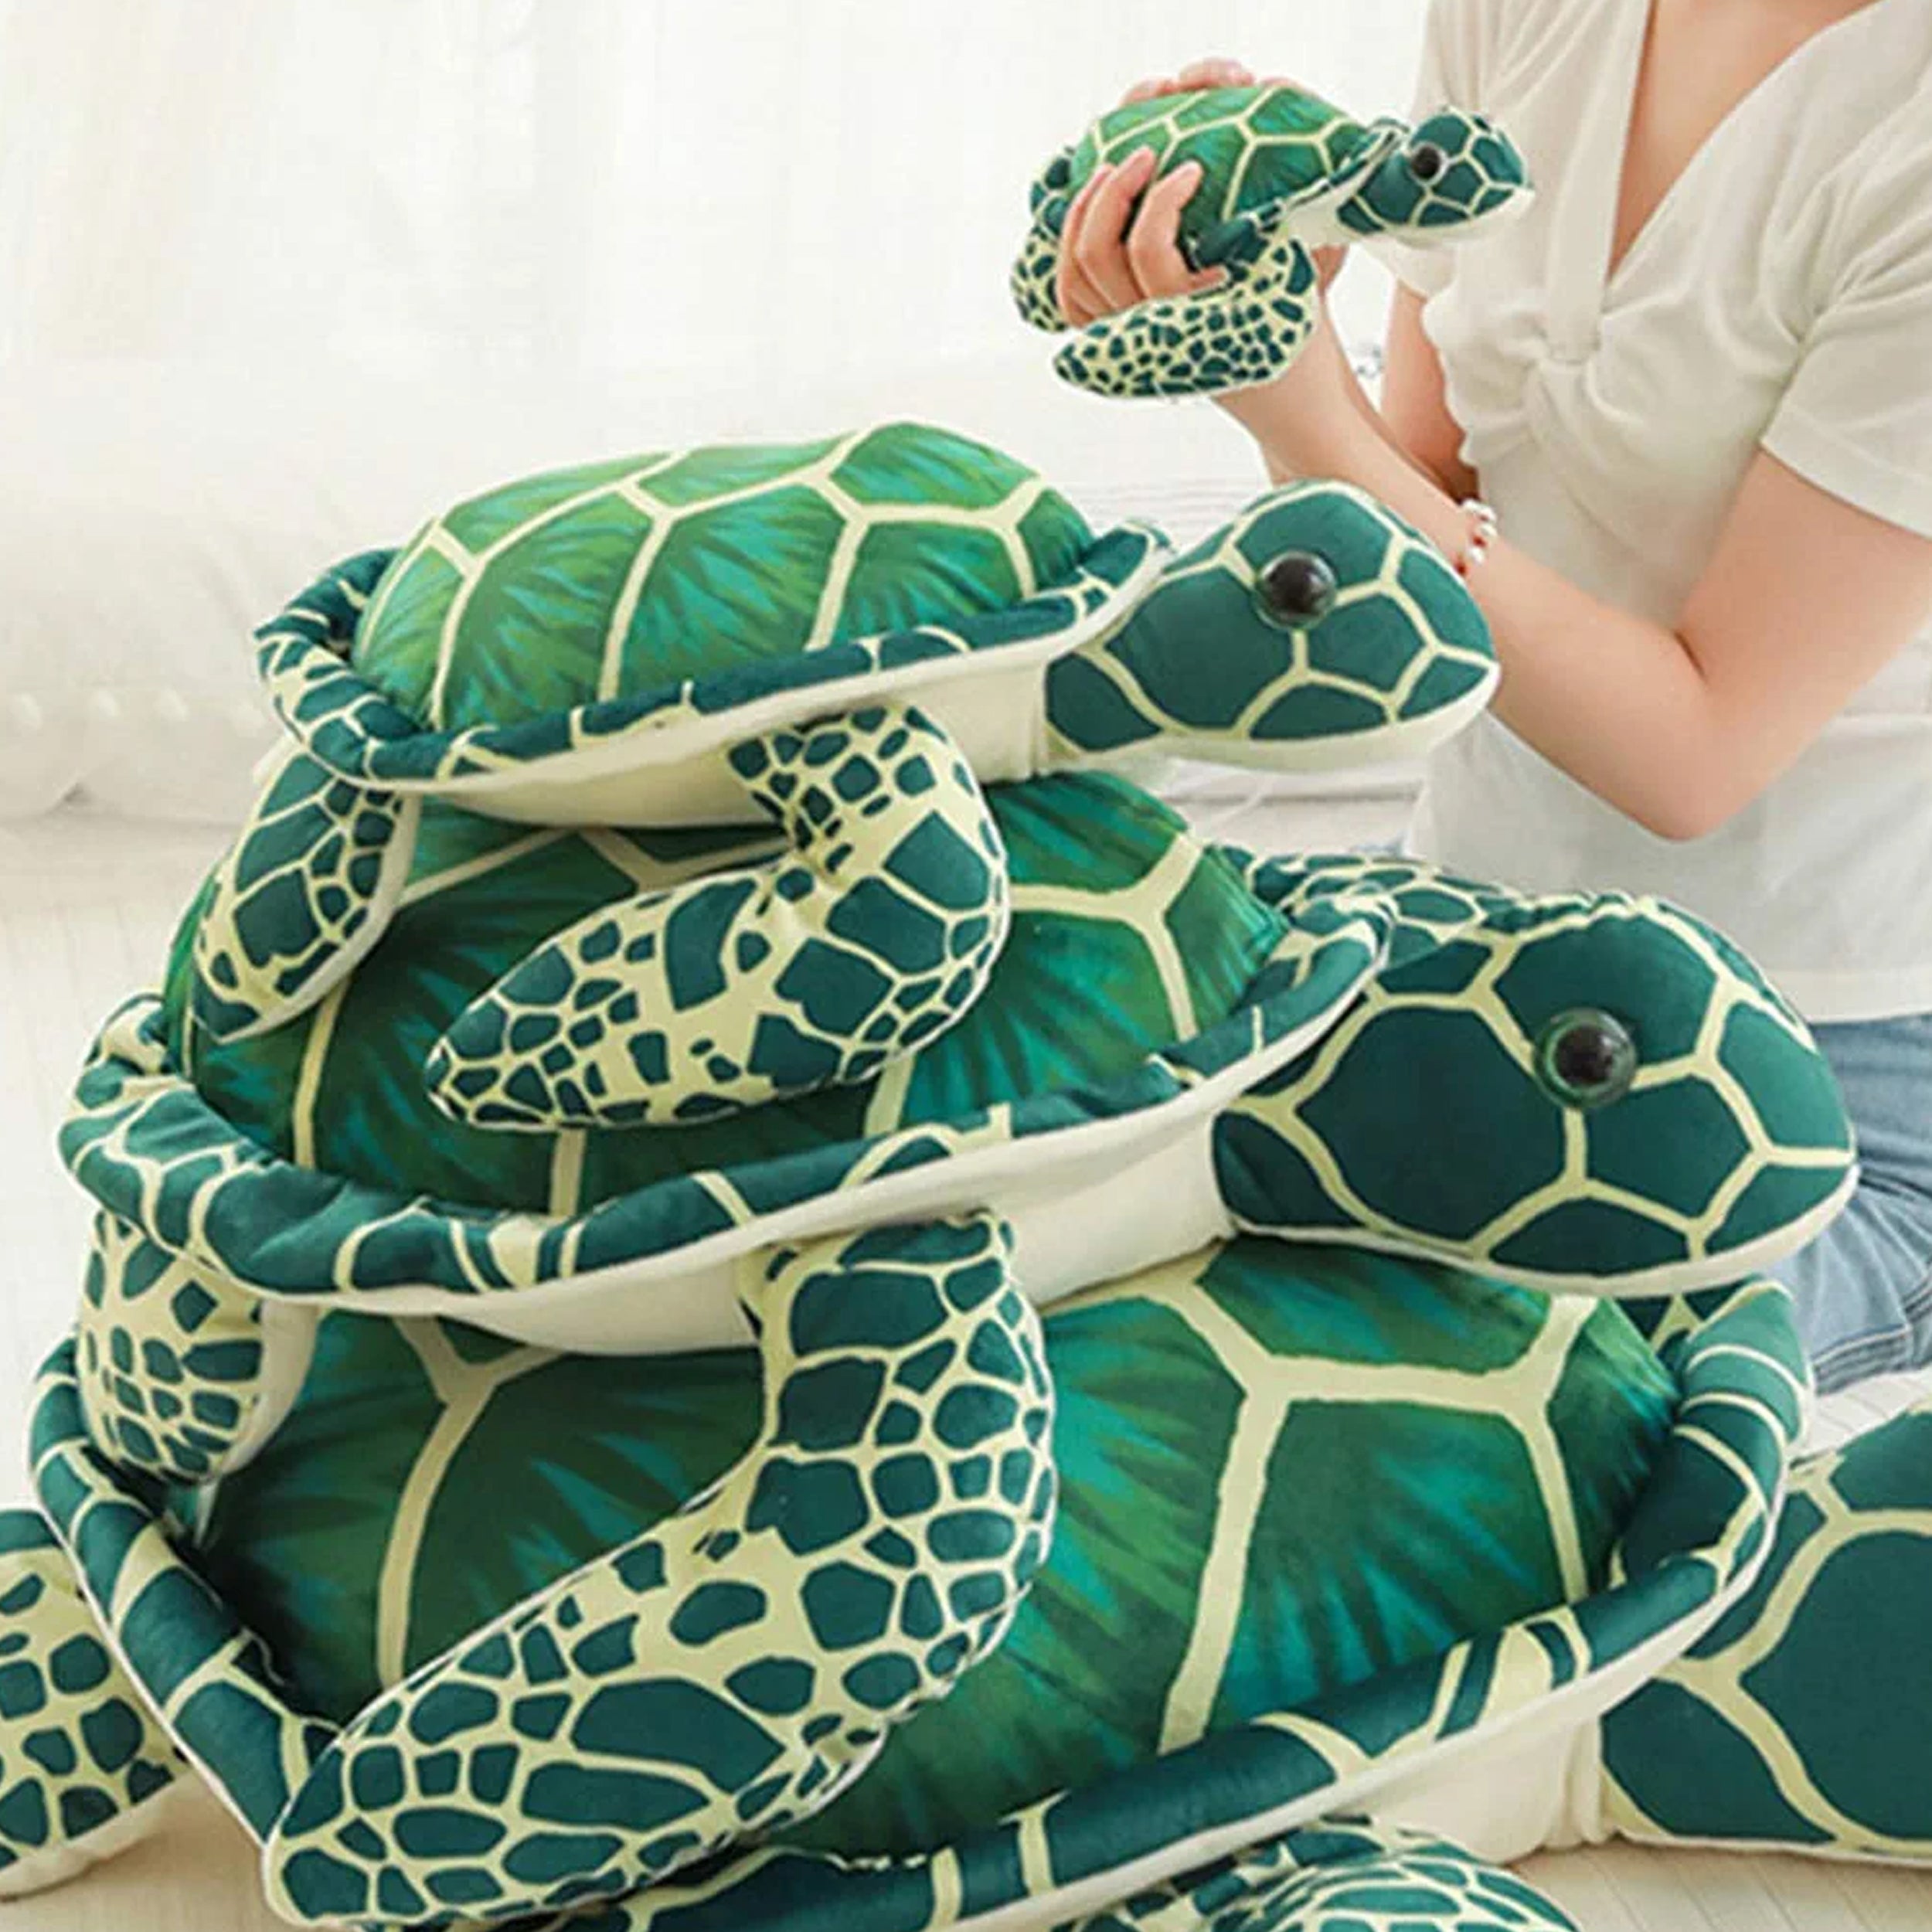 Turtle Plush Toys for Kids